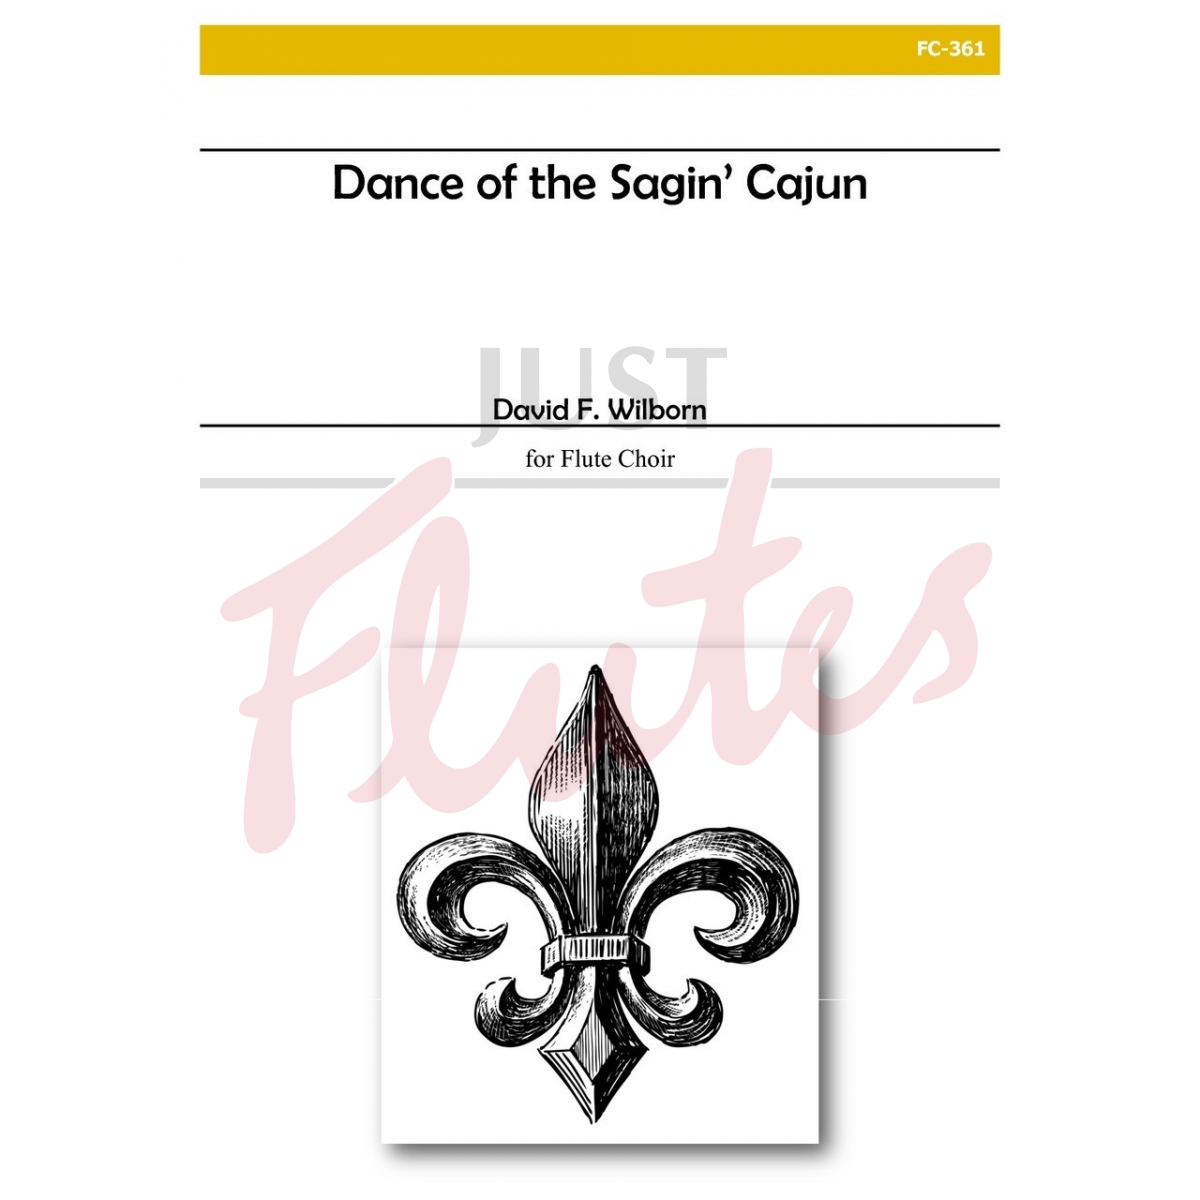 Dance of the Sagin' Cajun [Flute Choir]